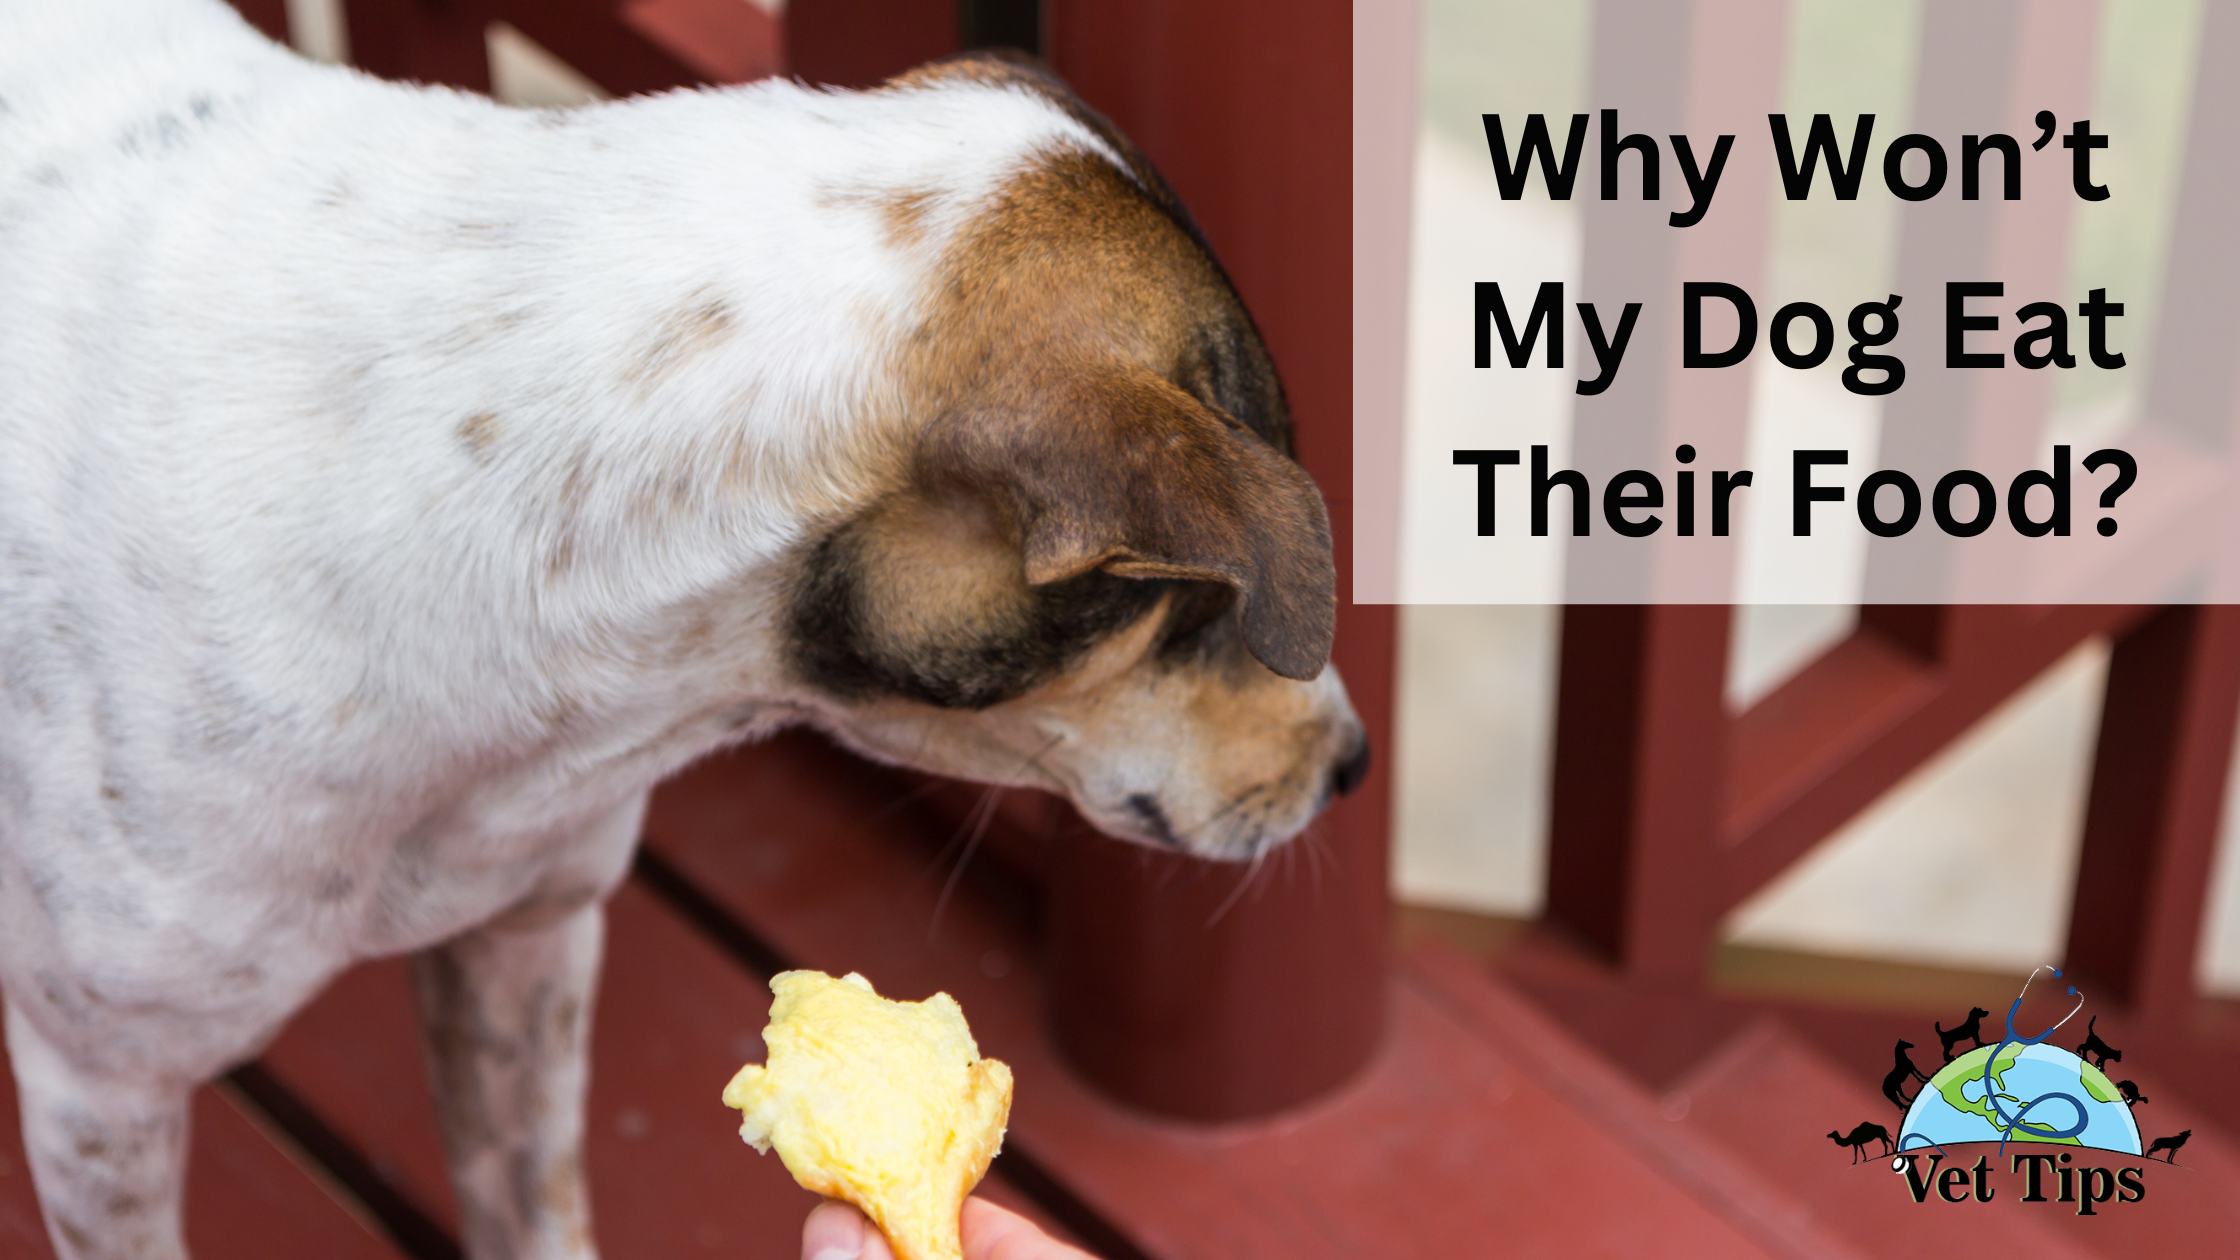 Why Won’t My Dog Eat Their Food?